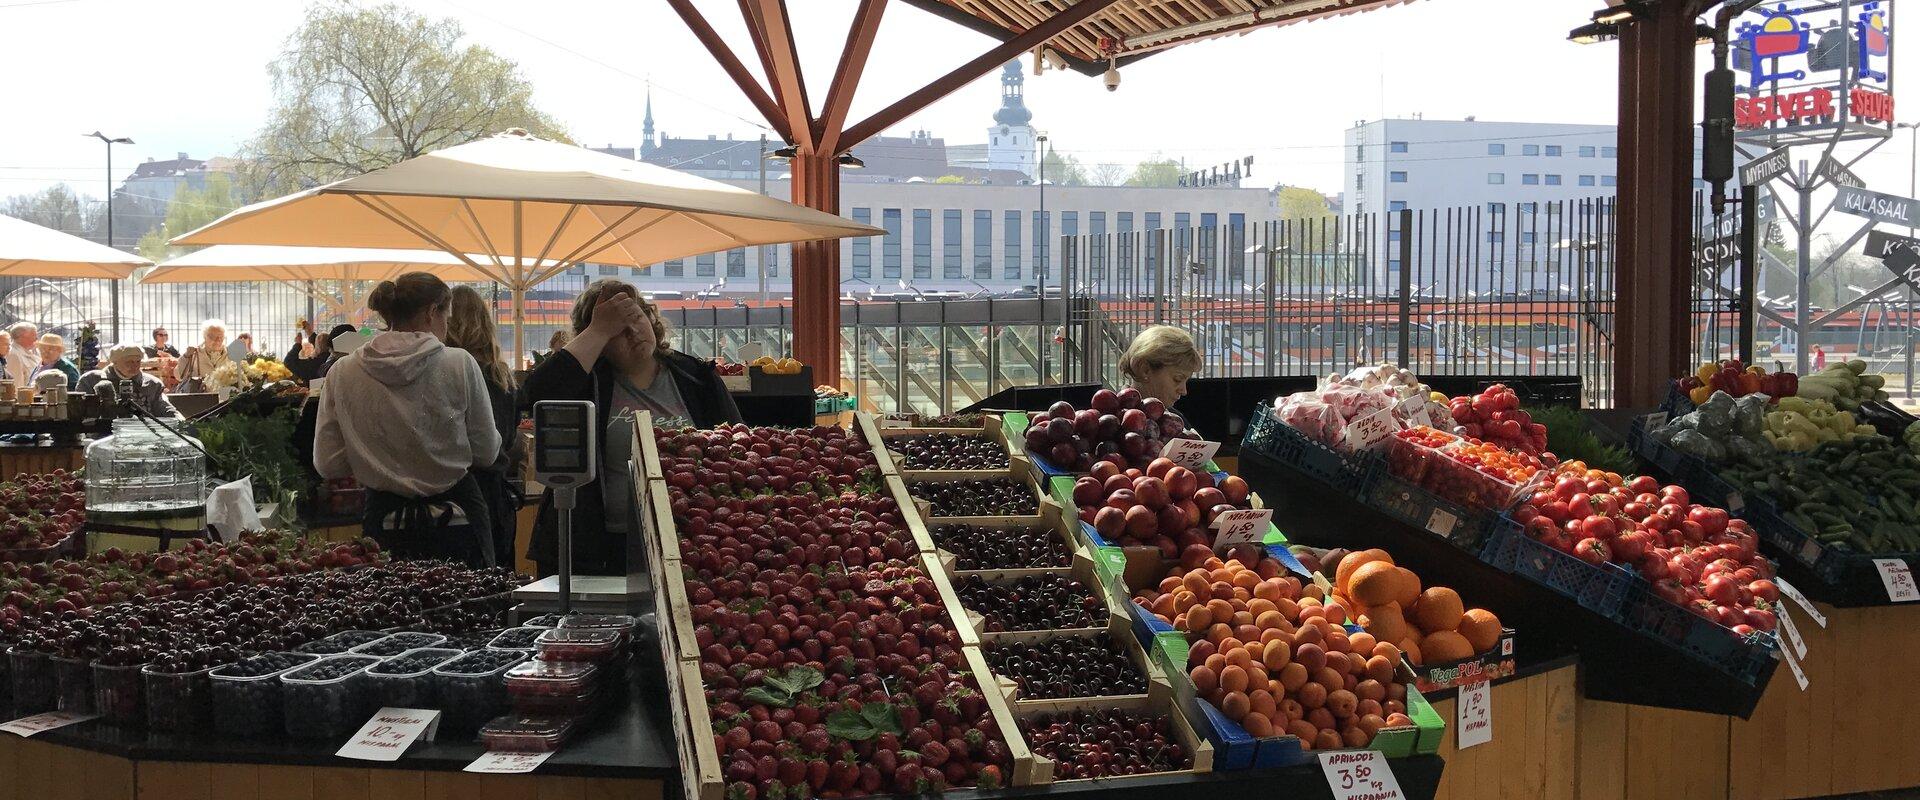 Tallinn Food Tour - a stop at Baltic Station Market